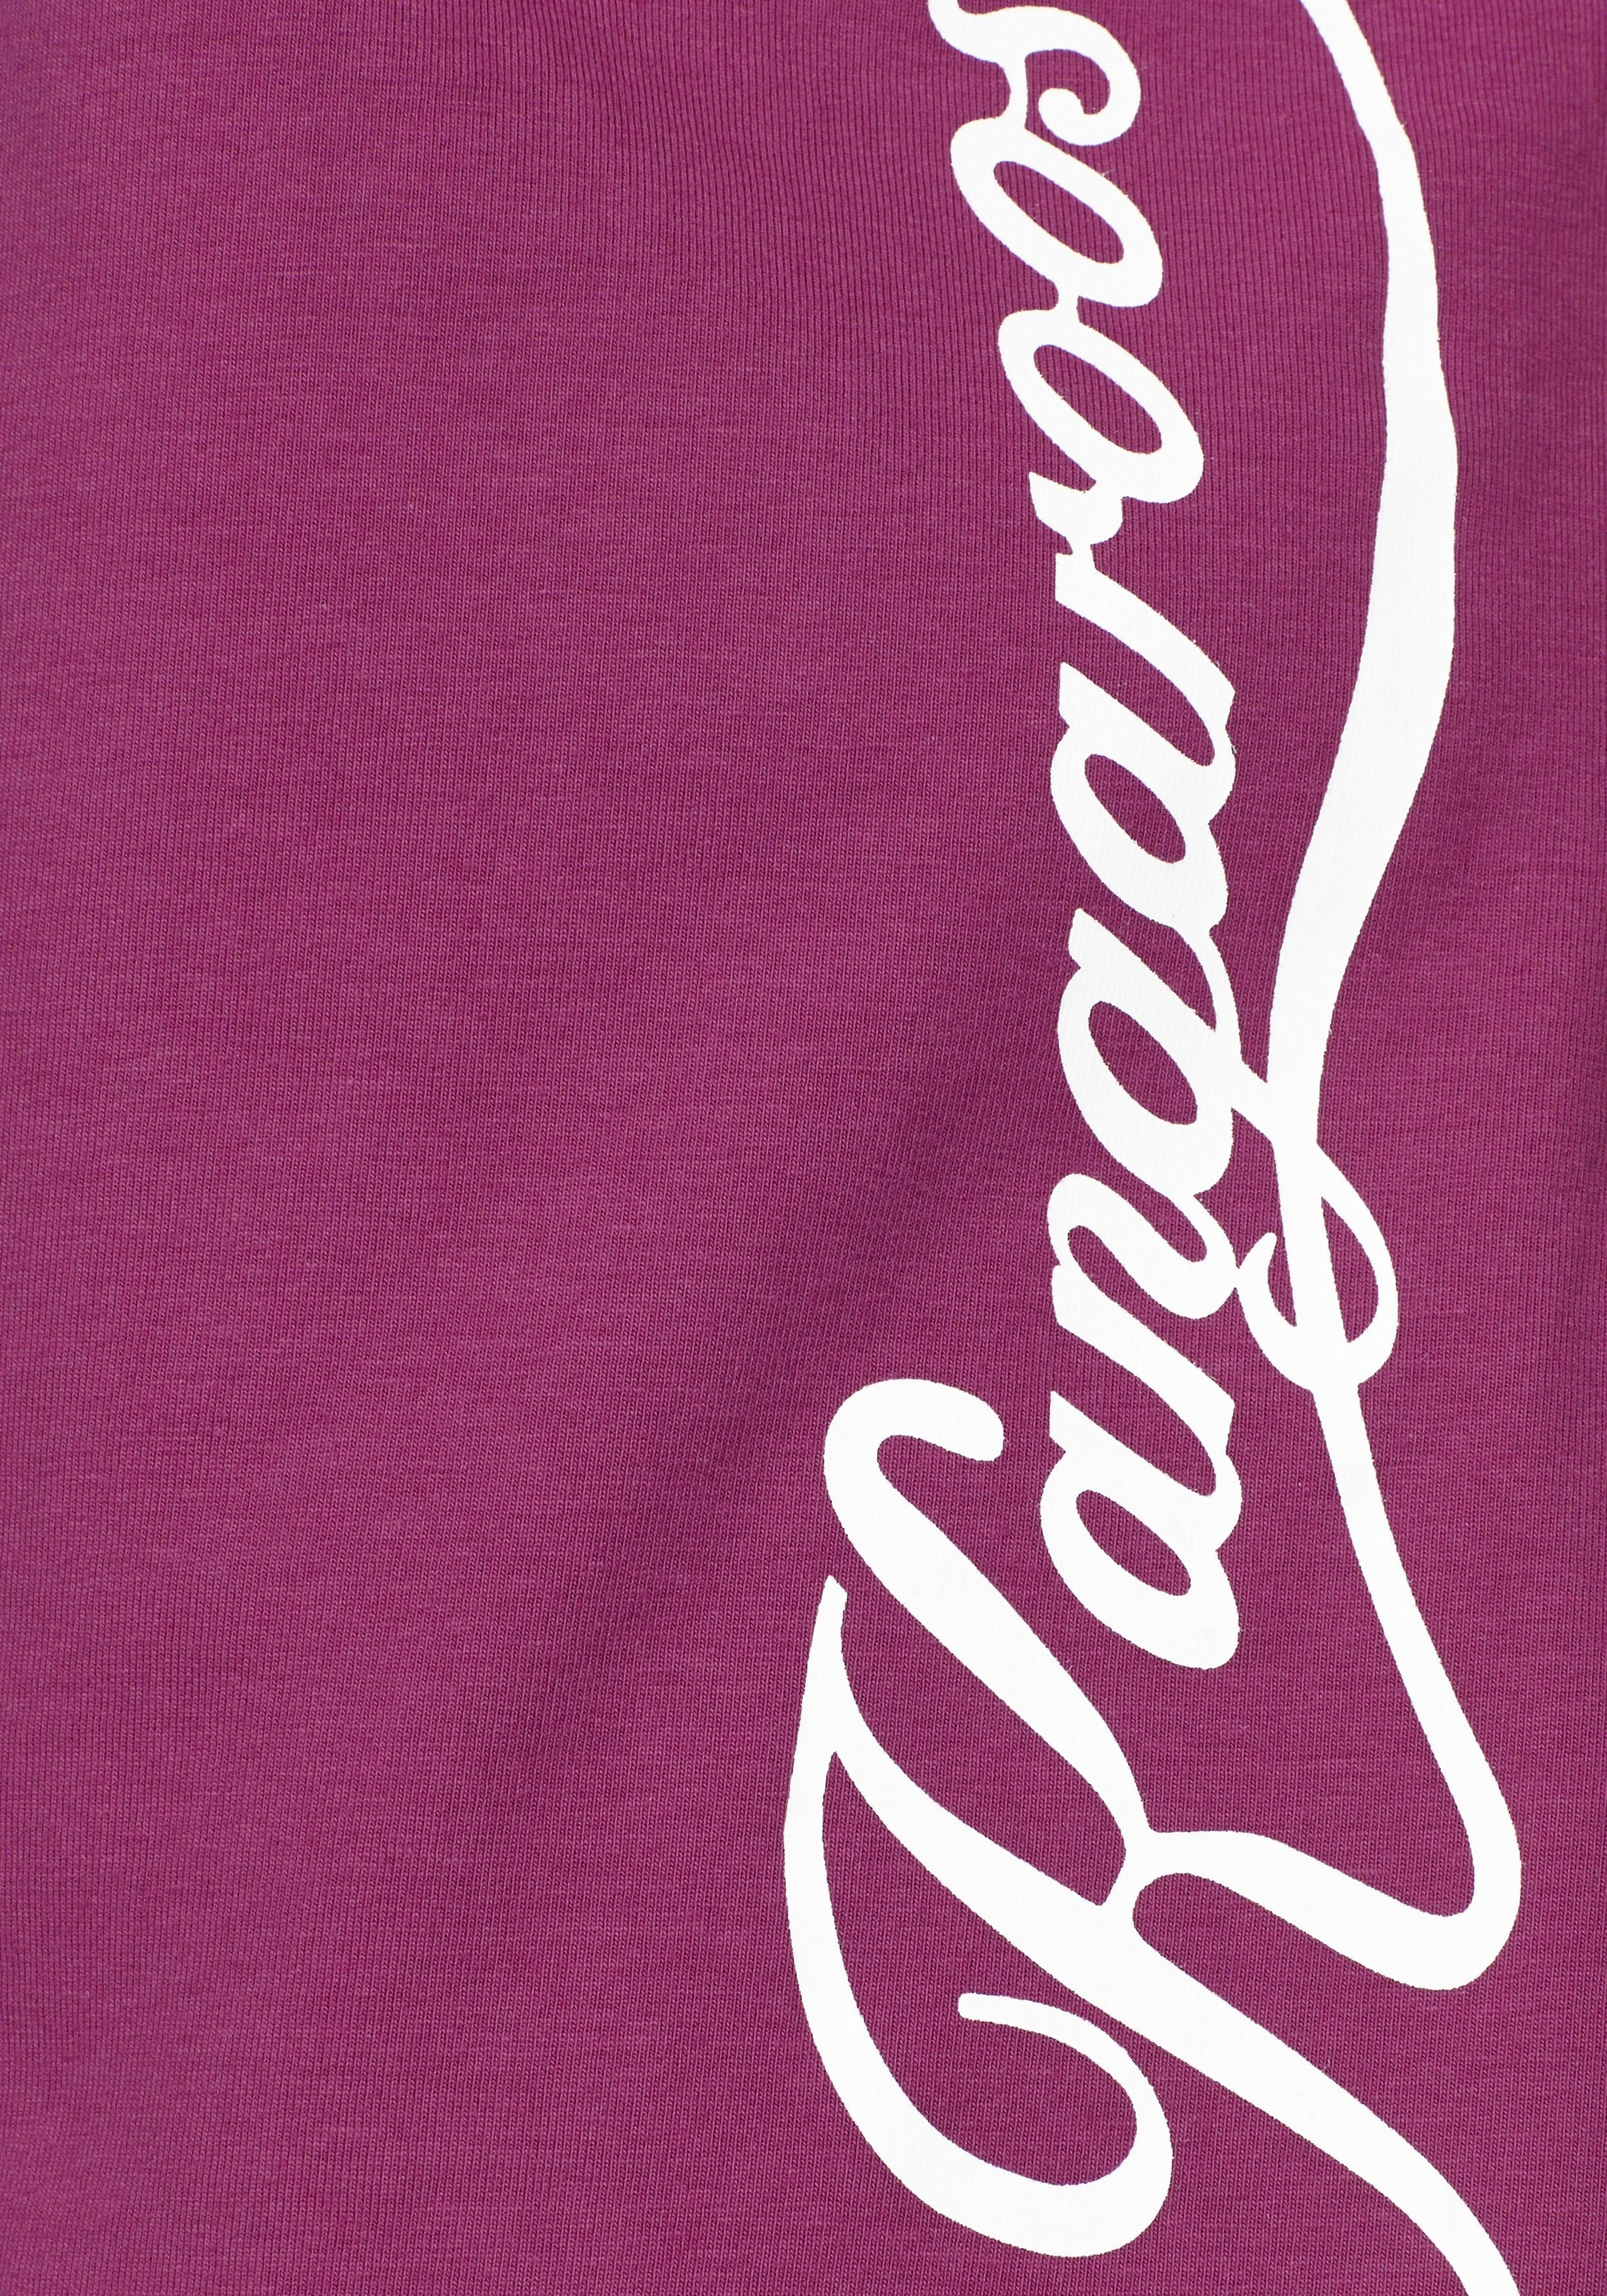 KangaROOS T-Shirt, online bestellen Größen Große